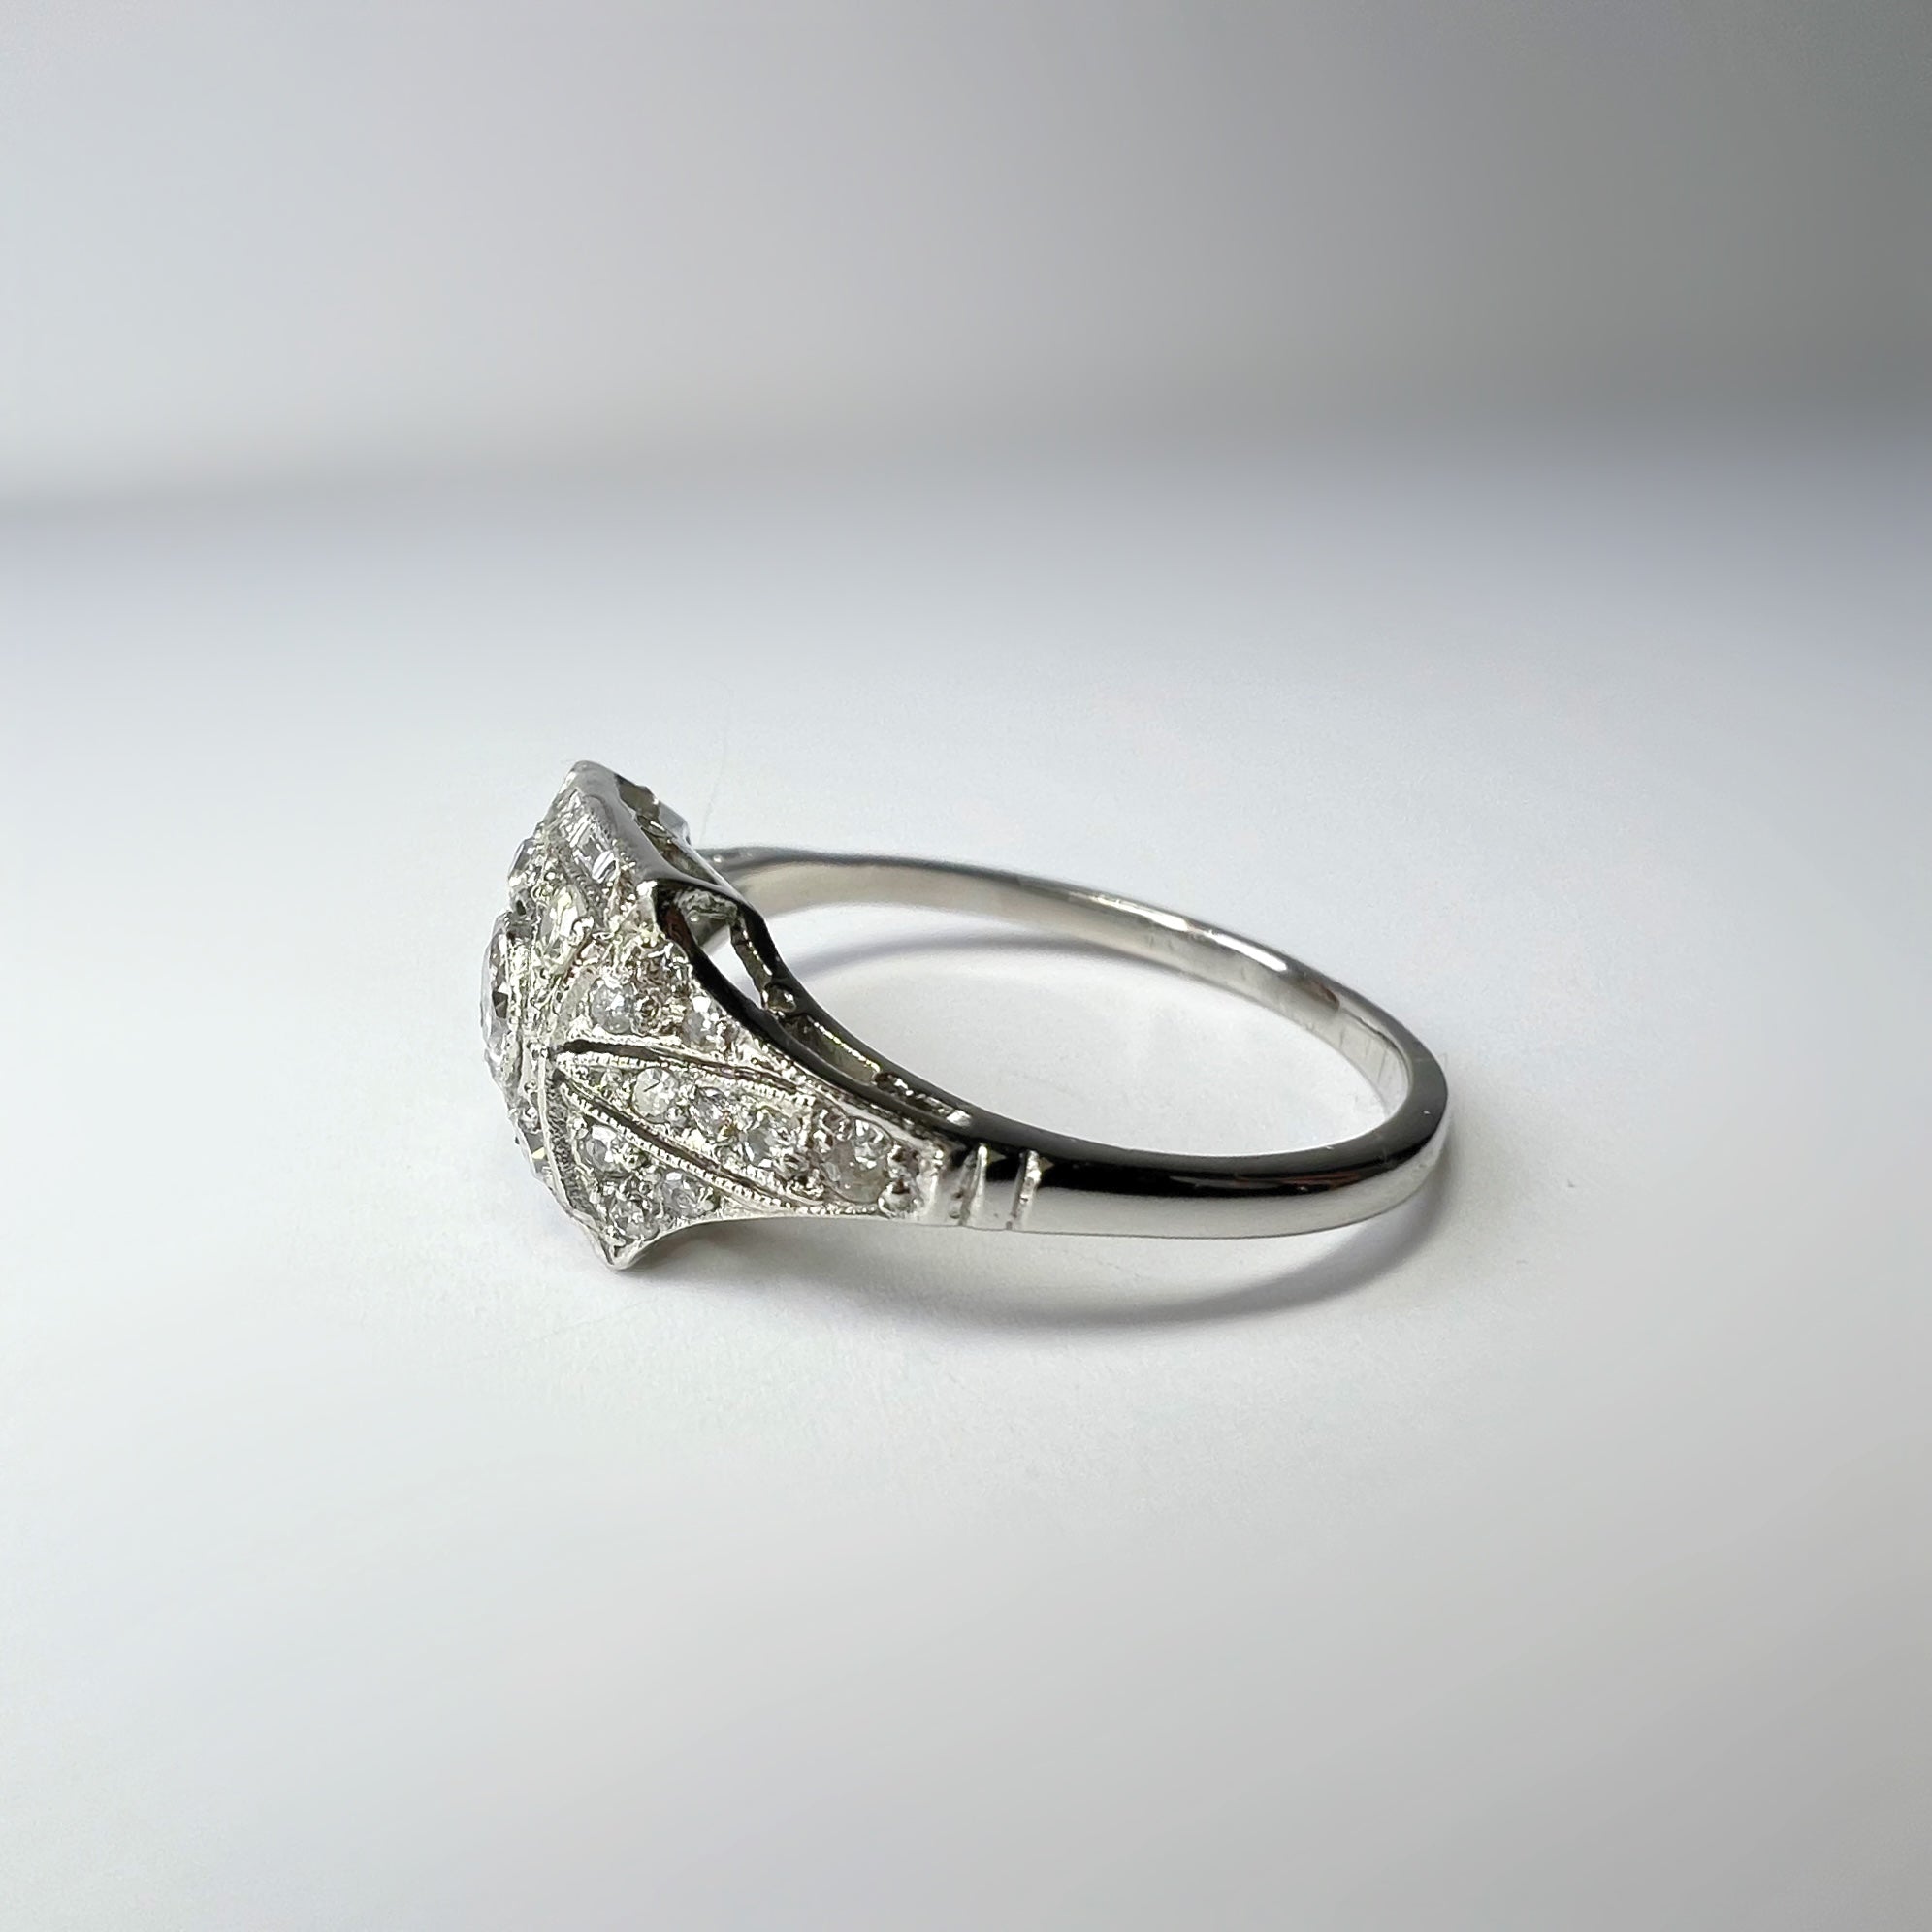 Art Deco Style Square Bombe Diamond Ring